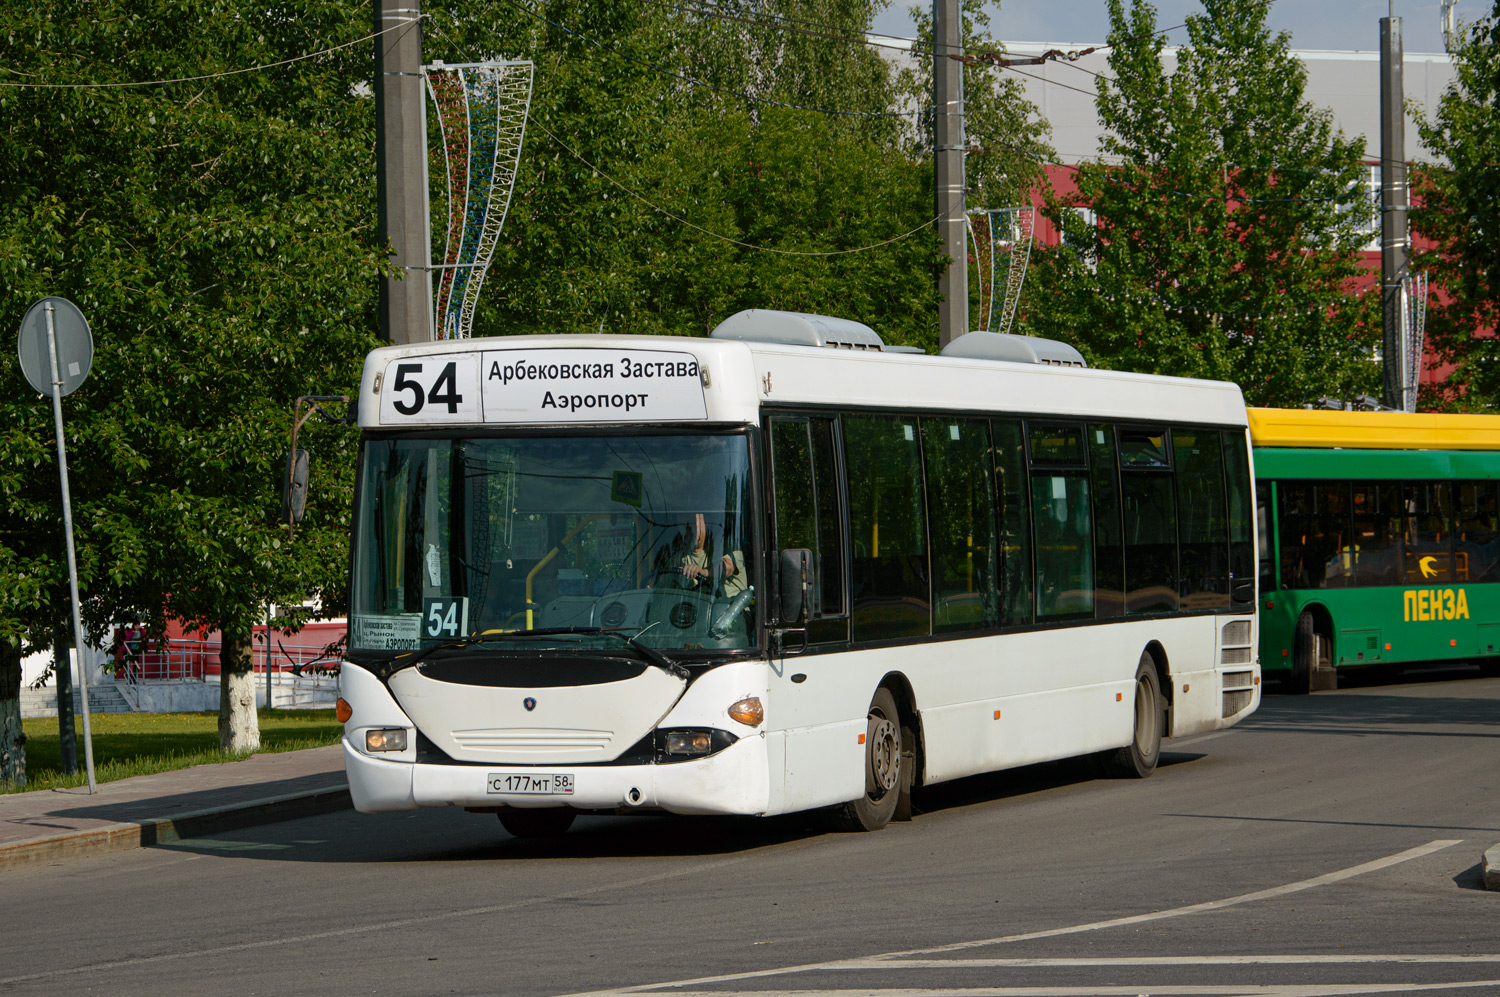 Penza region, Scania OmniLink I (Scania-St.Petersburg) č. С 177 МТ 58